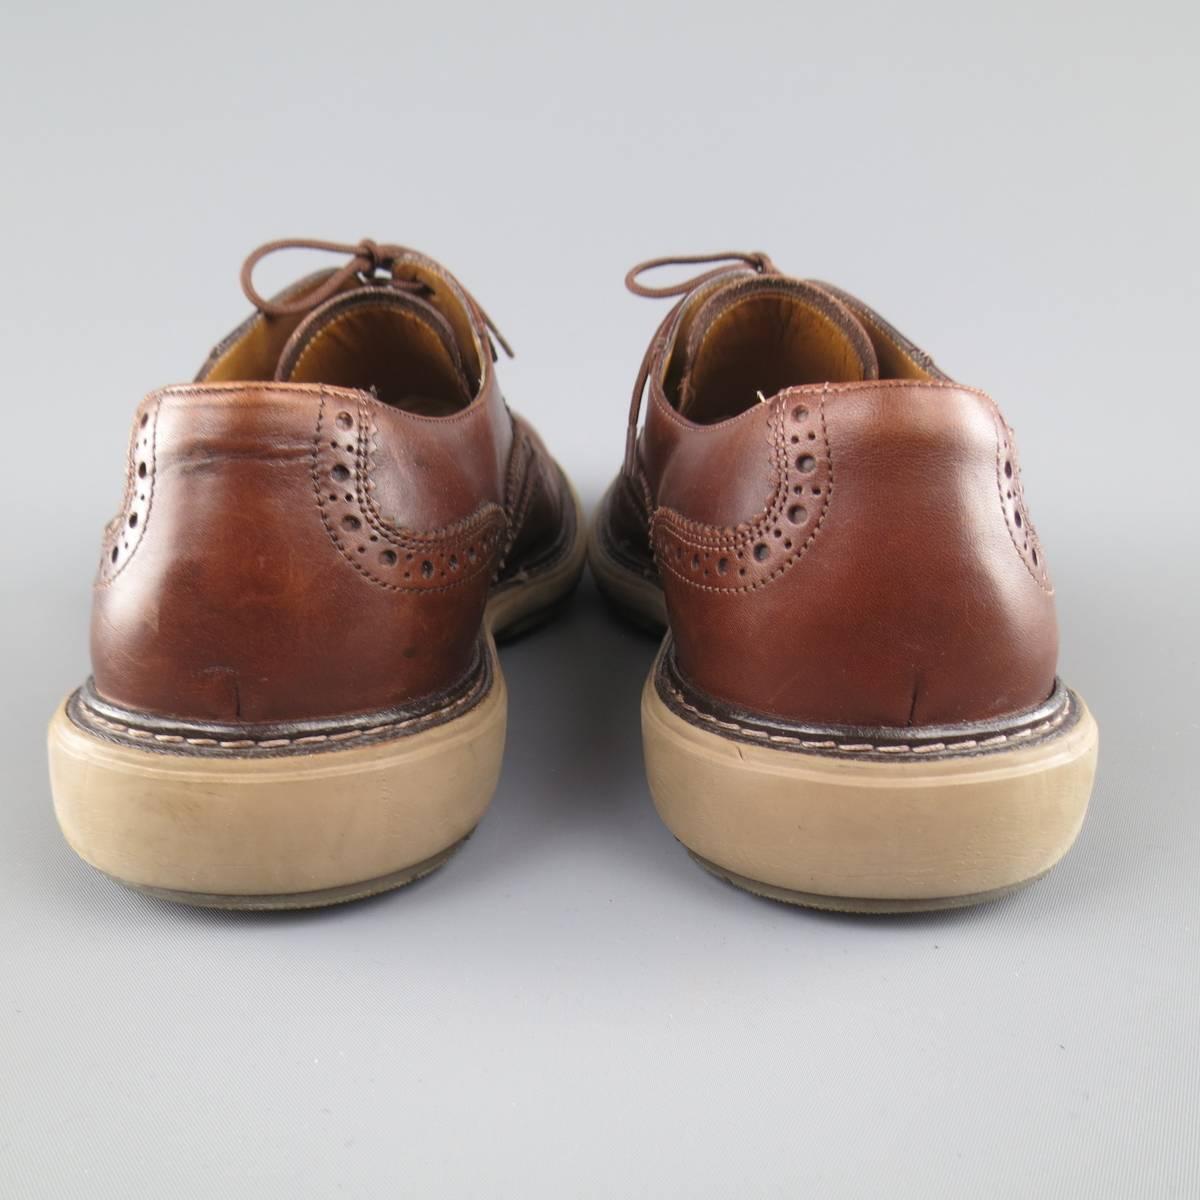 Men's SALVATORE FERRAGAMO Shoes - Brogues Size 11 Brown Leather Rubber Sole Lace Up